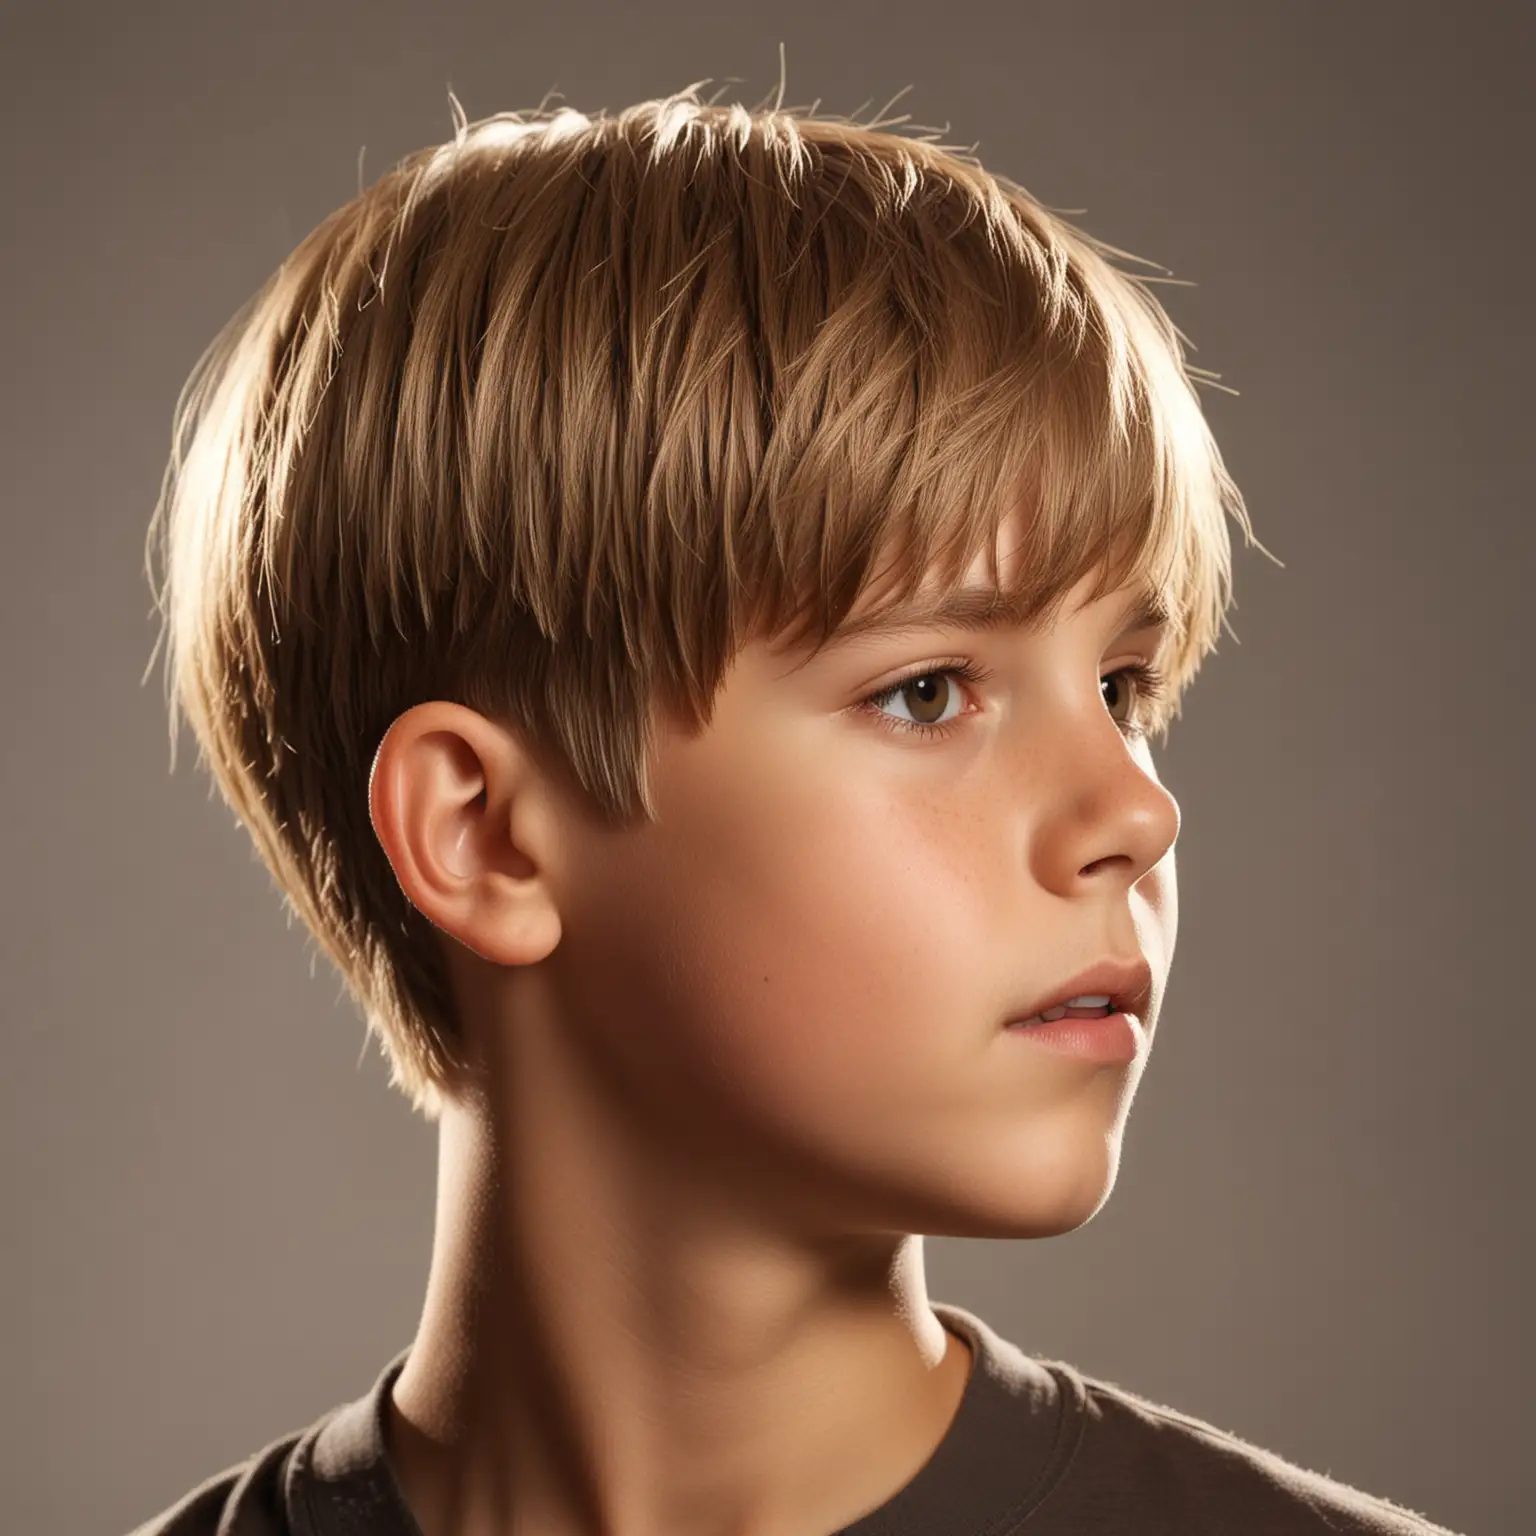 Hyper Realistic Portrait of a TwelveYearOld Boy with Shiny Hair in Sunlight